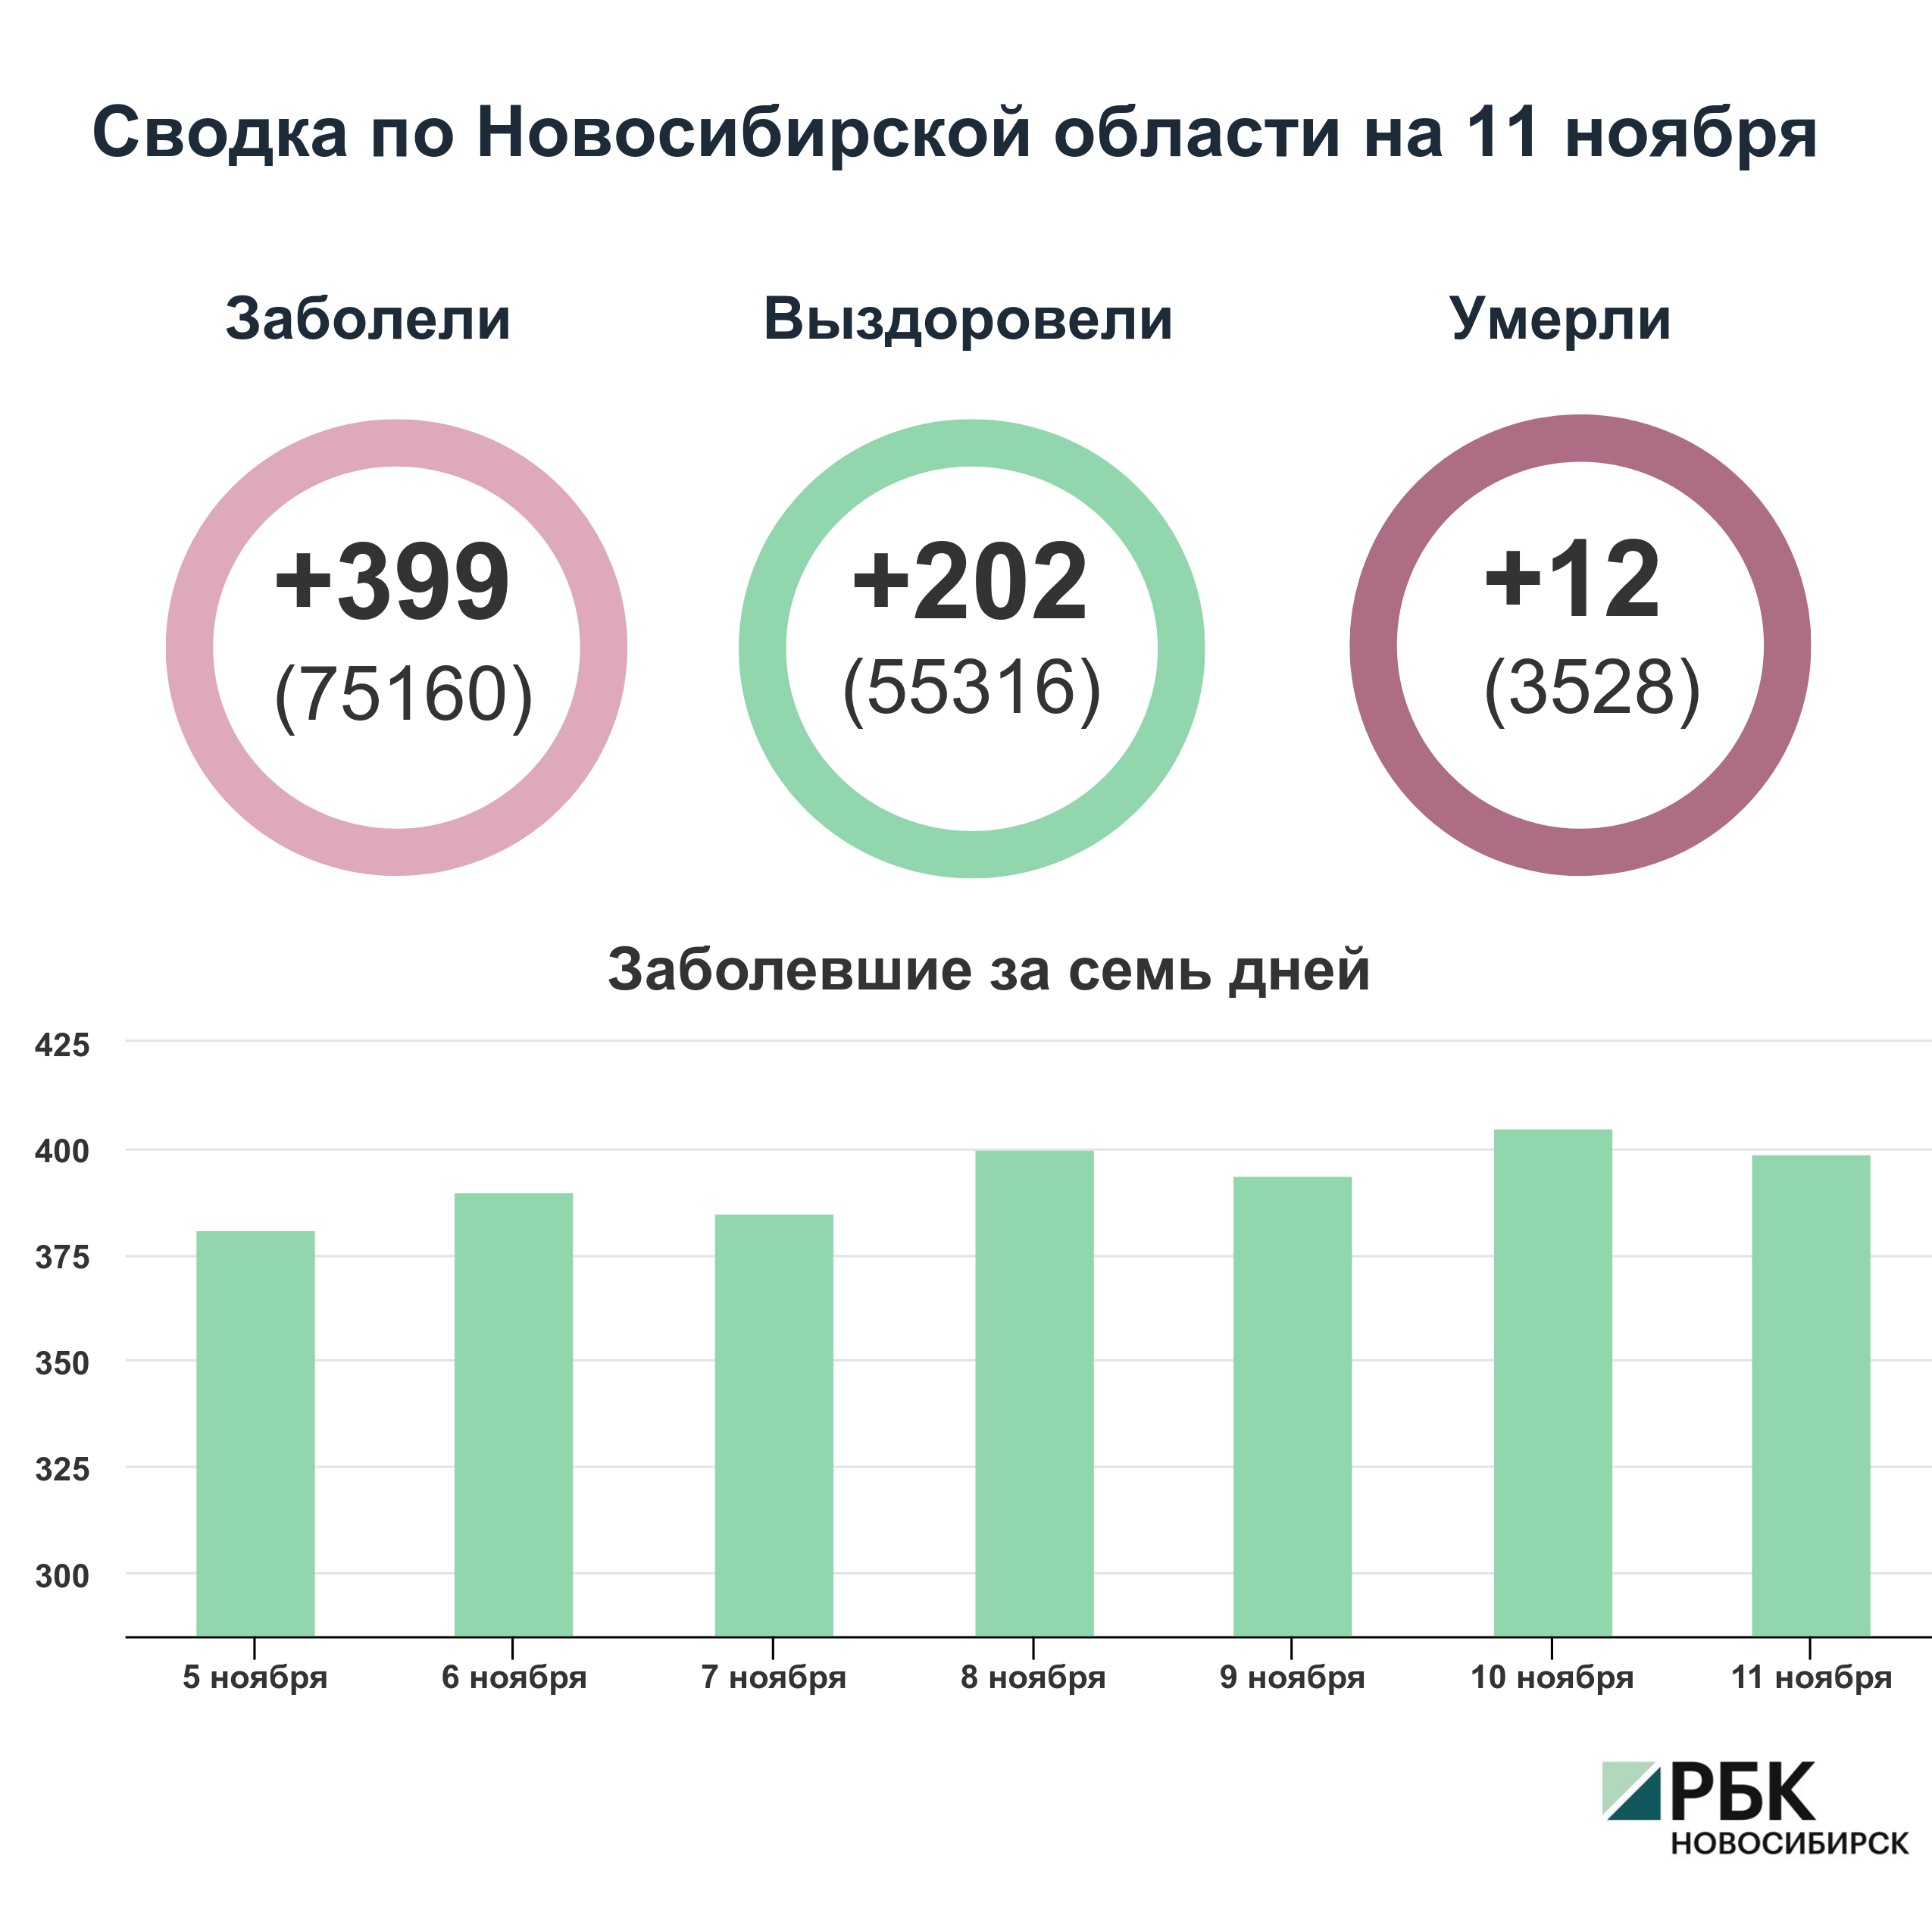 Коронавирус в Новосибирске: сводка на 11 ноября